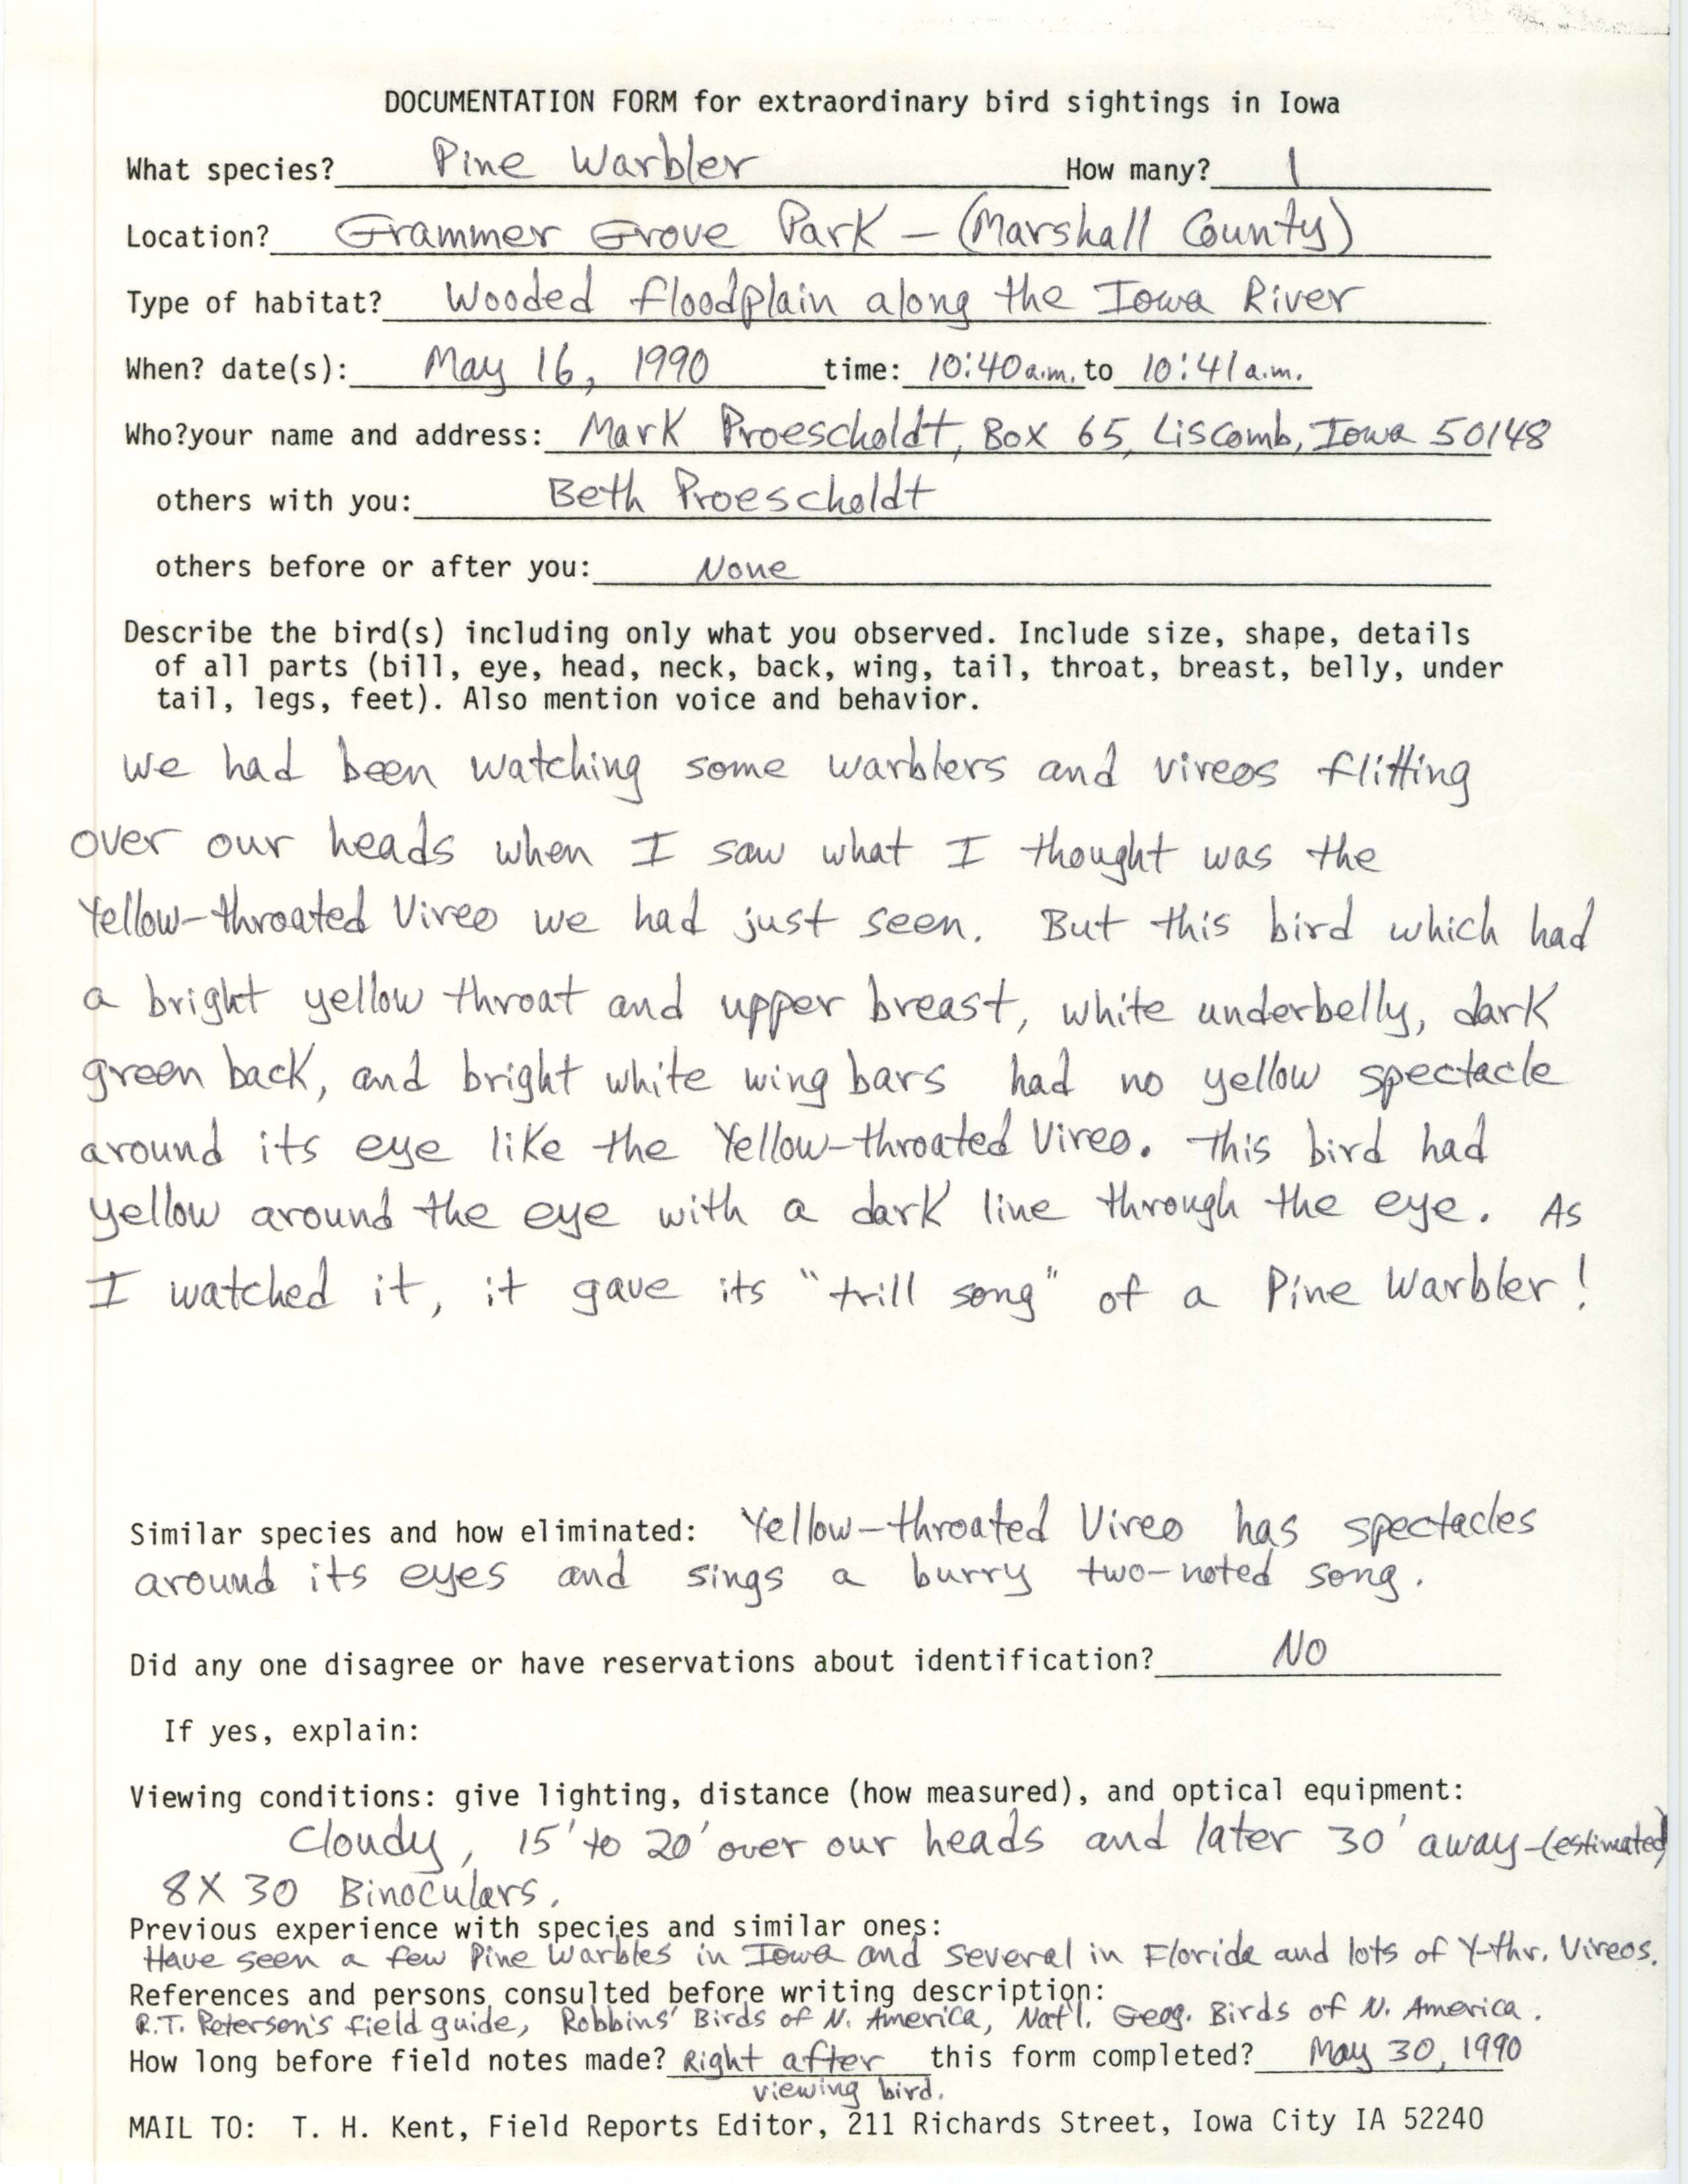 Rare bird documentation form for Pine Warbler at Grammer Grove Park, 1990